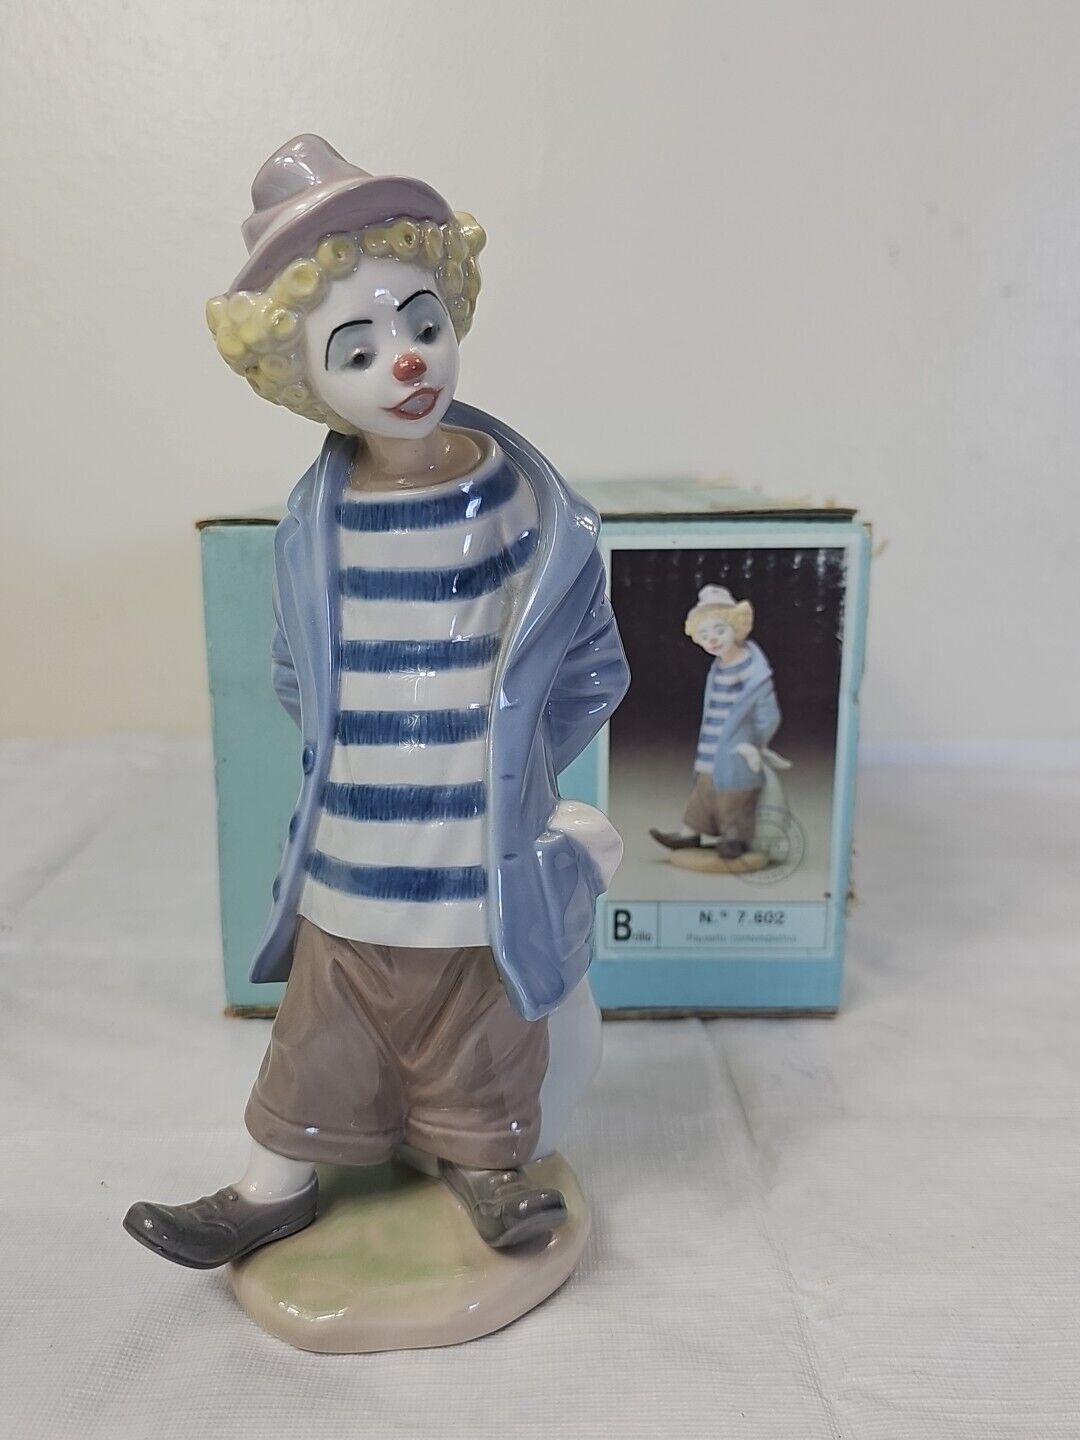 Lladro “Little Traveler” Figurine #7602 In Original Box Mint Condition 1986 